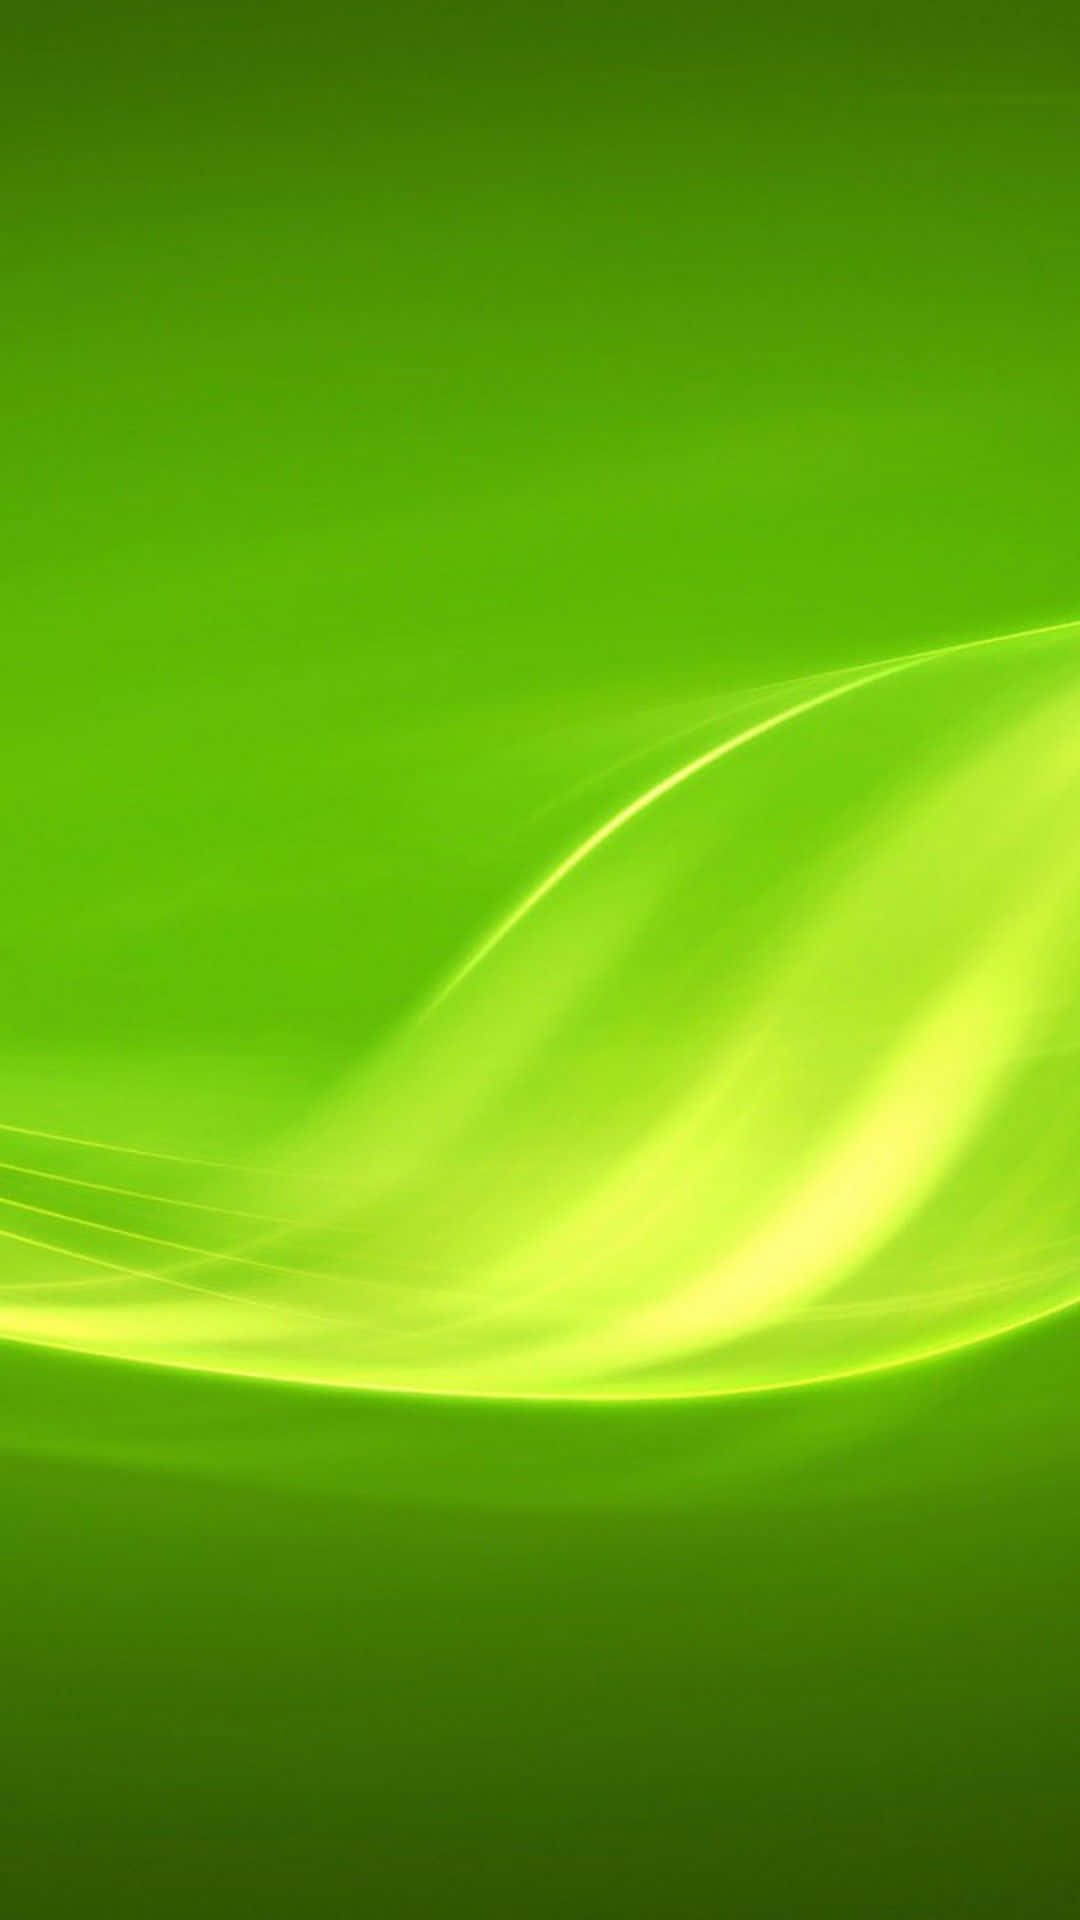 Download Vibrant Lime Green Abstract Wallpaper Wallpaper | Wallpapers.com